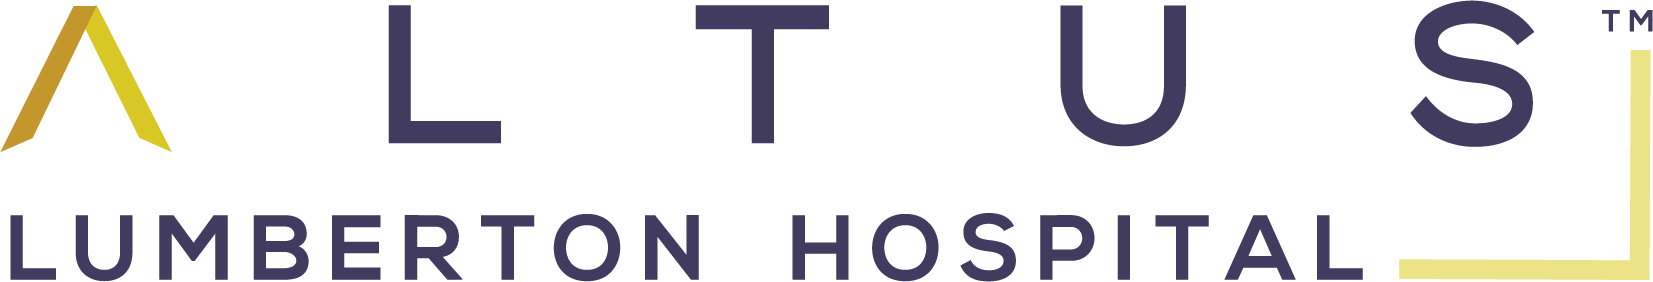 Altus Lumberton Hospital Logo